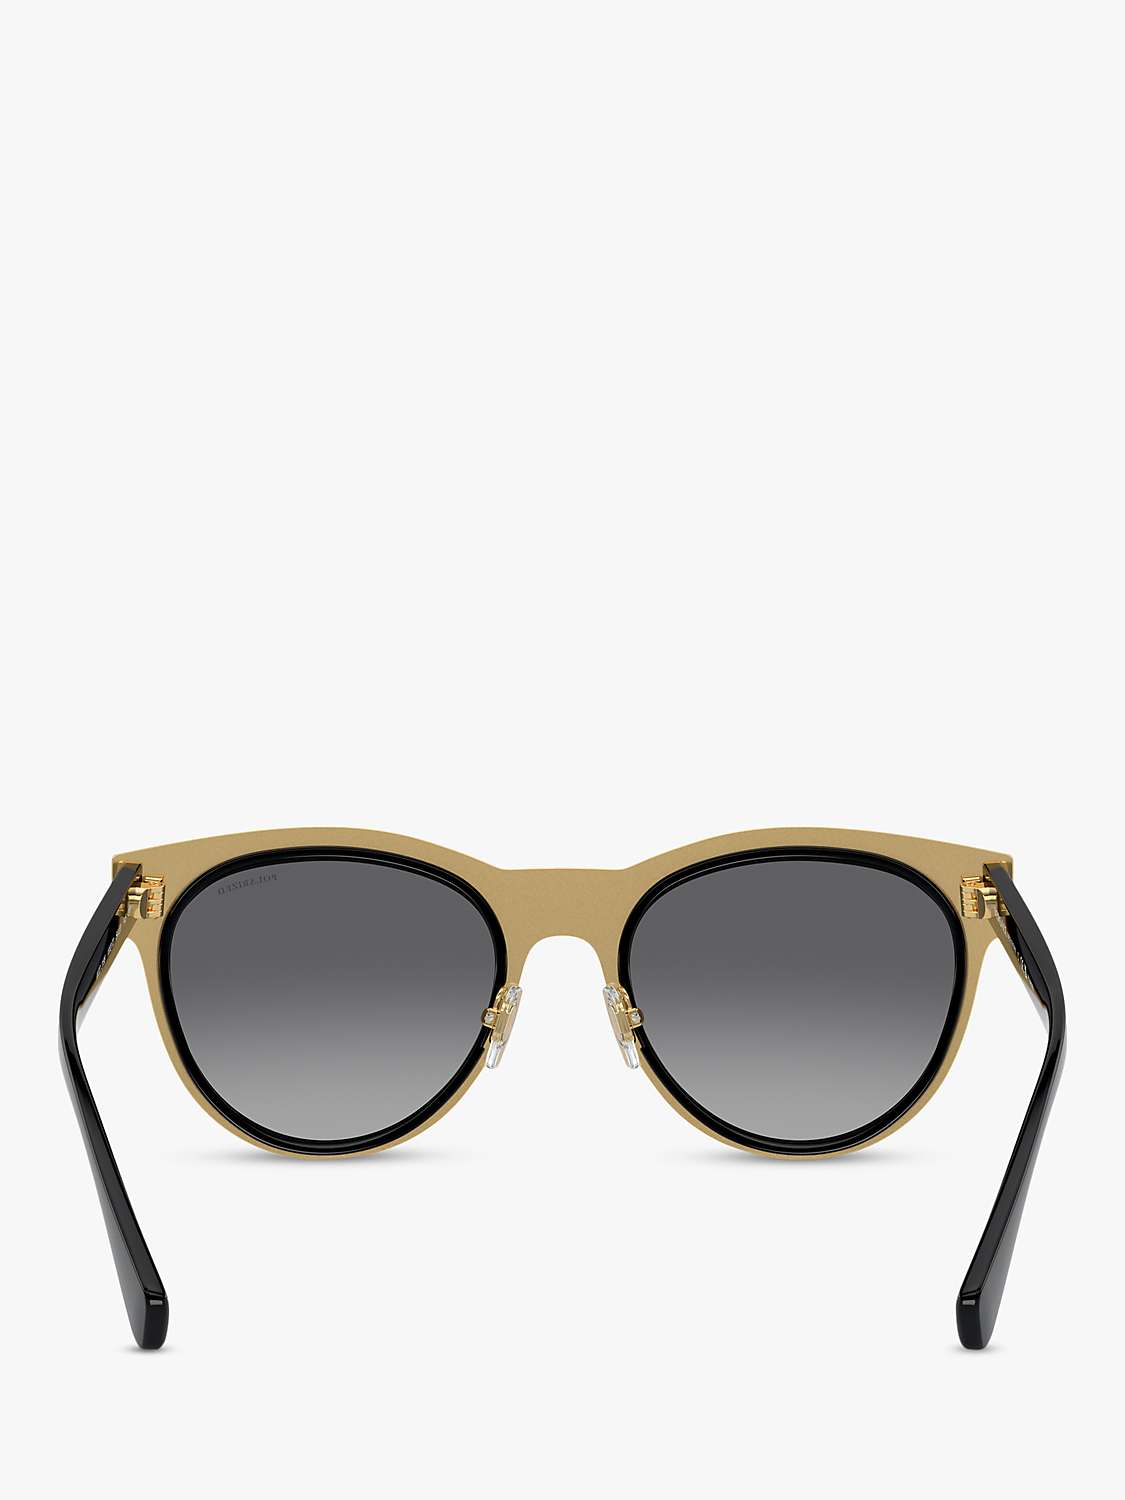 Buy Versace VE2198 Women's Oval Sunglasses, Black/Grey Online at johnlewis.com